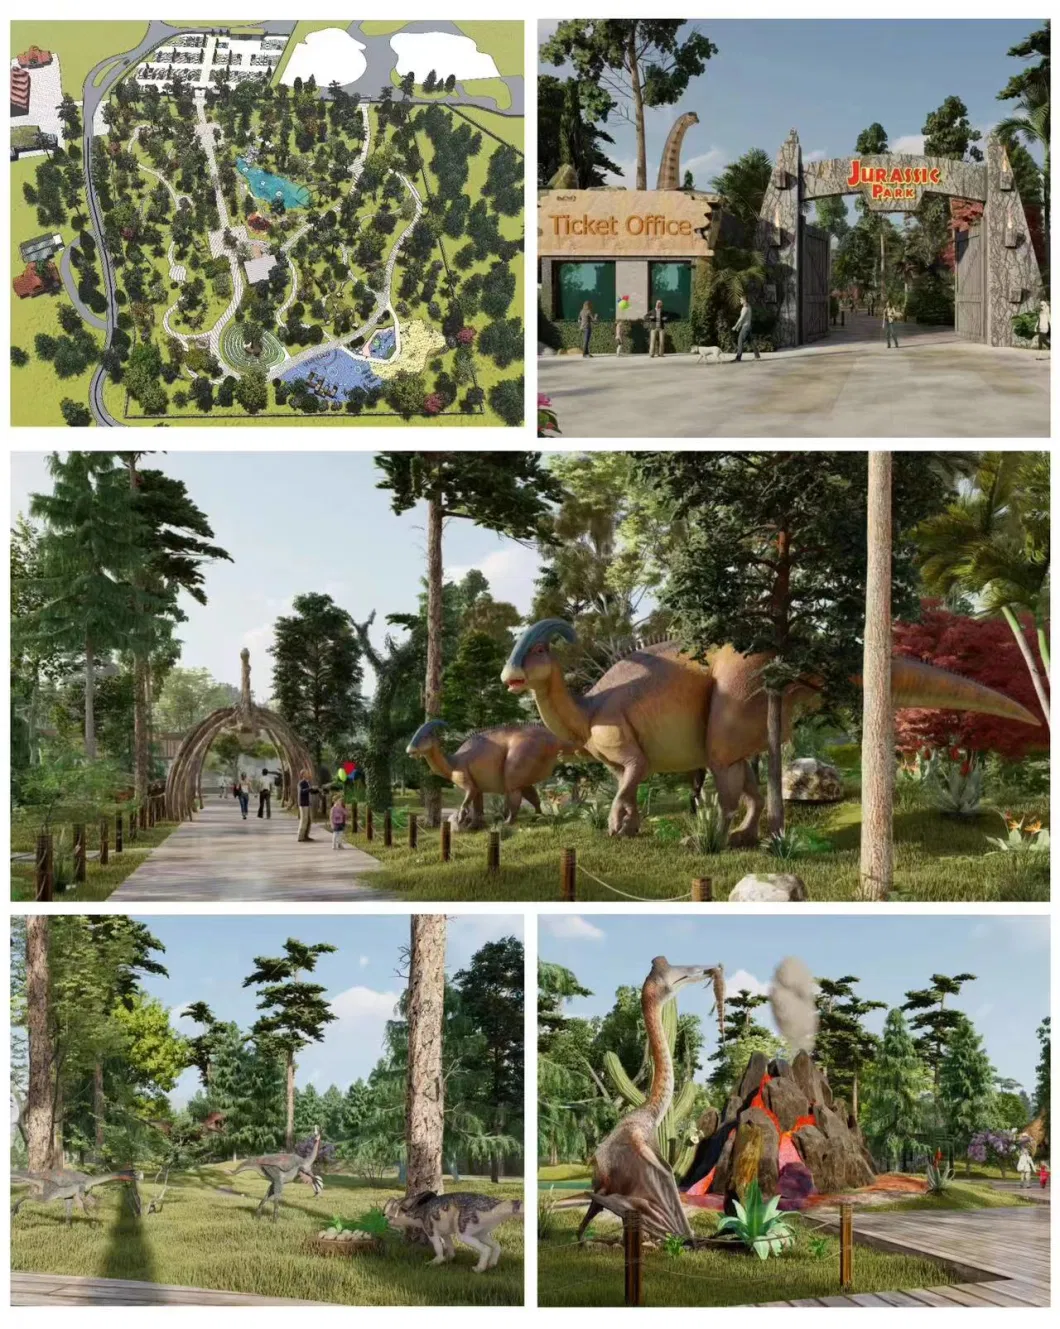 Animatronic Dinosaur Model Theme Park Animal Decoration